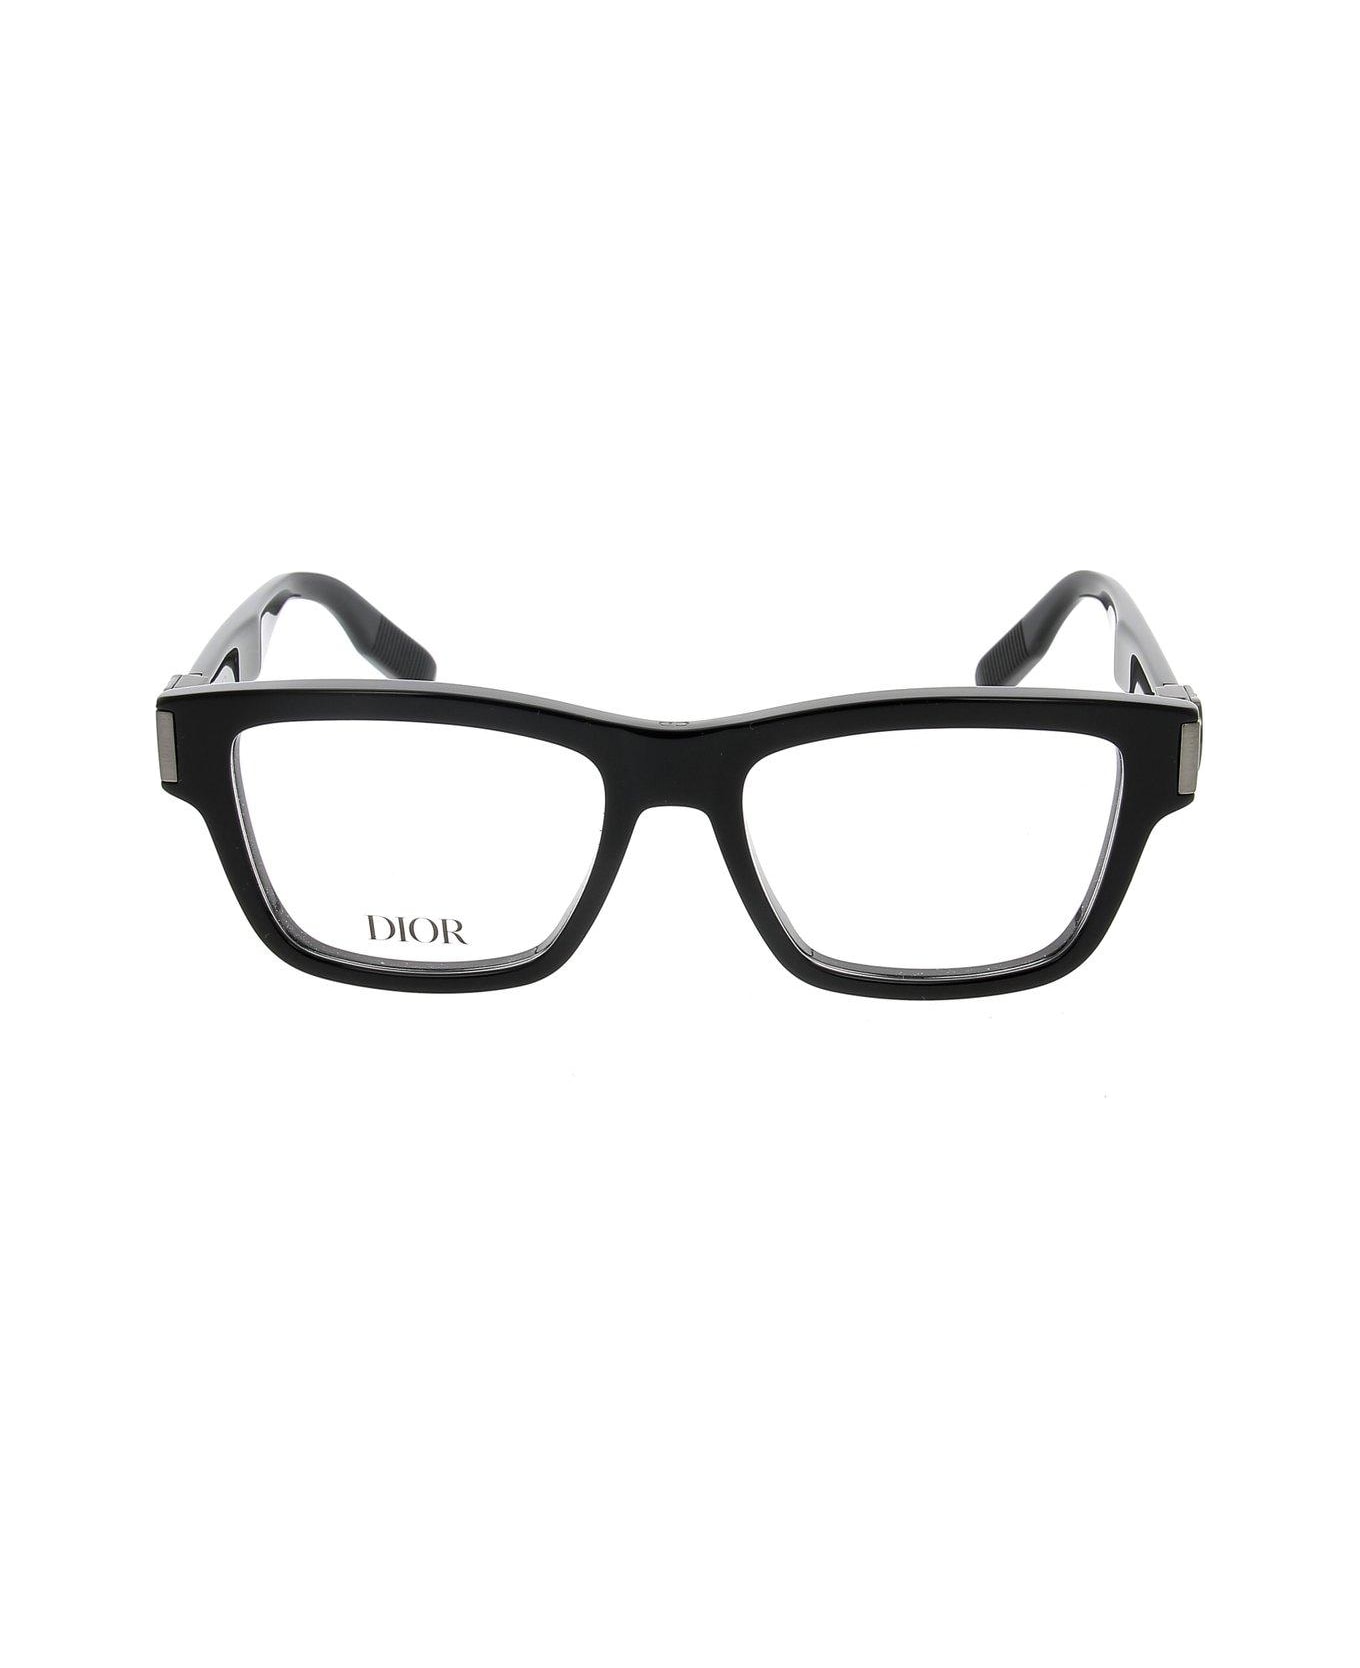 Dior Eyewear Rectangle Frame Glasses - 1000